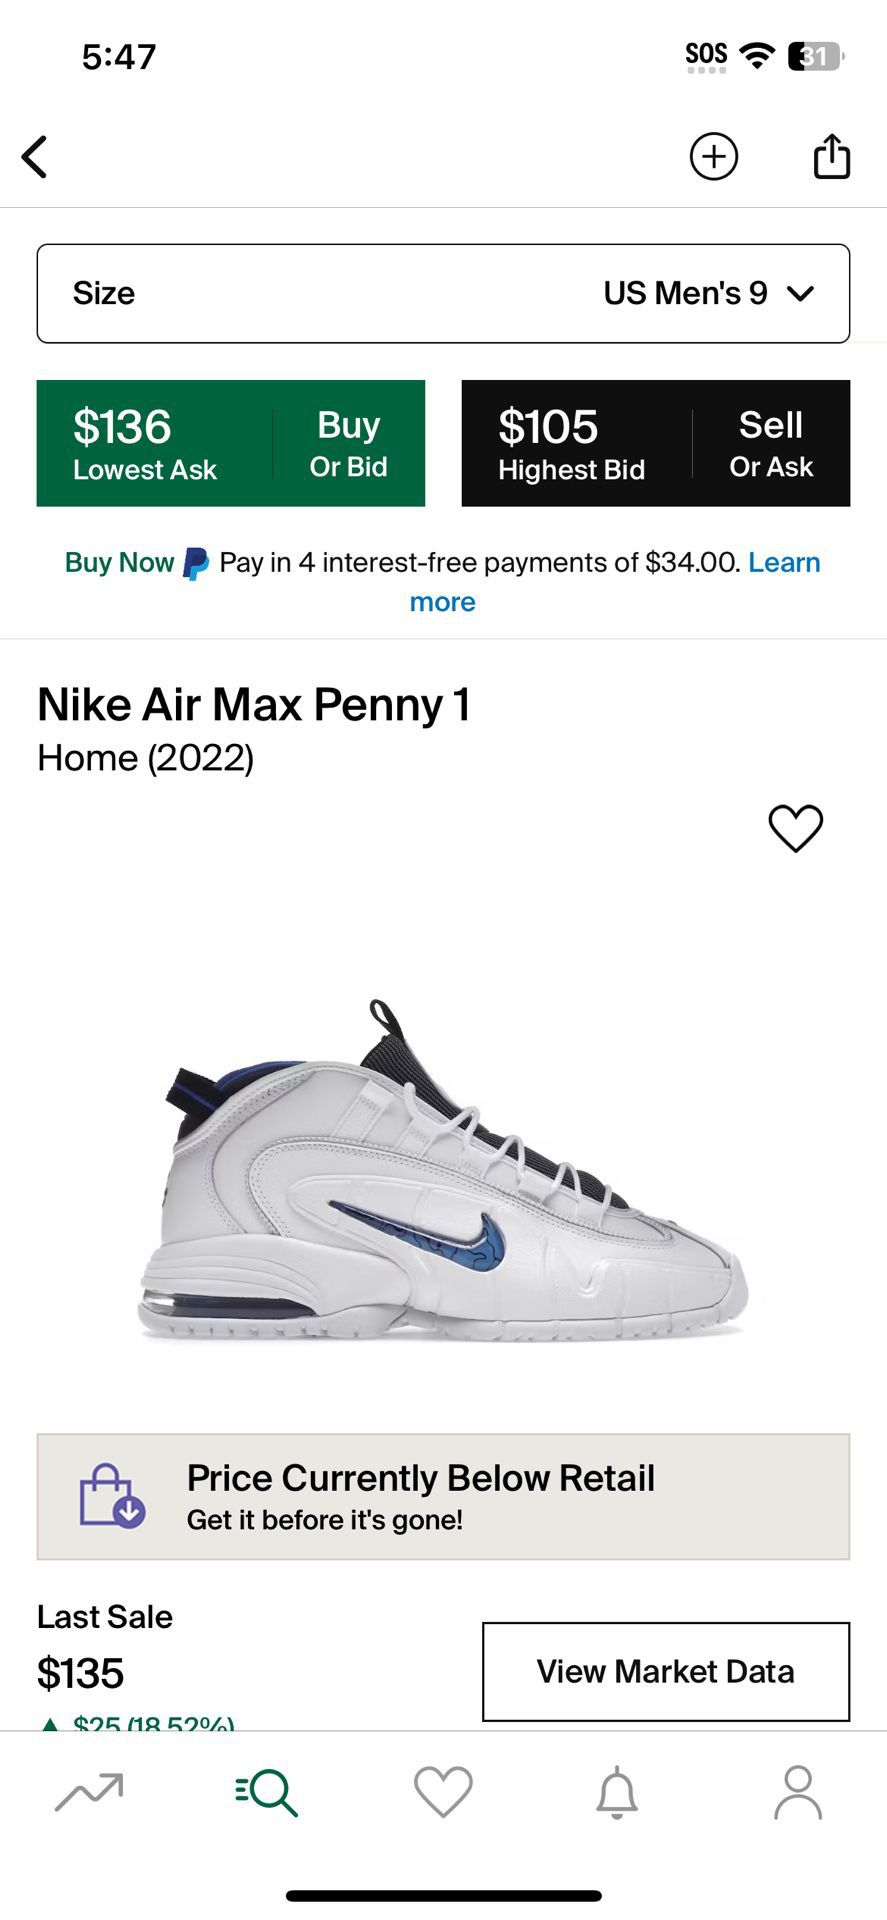 Nike Air Penny 1 Home